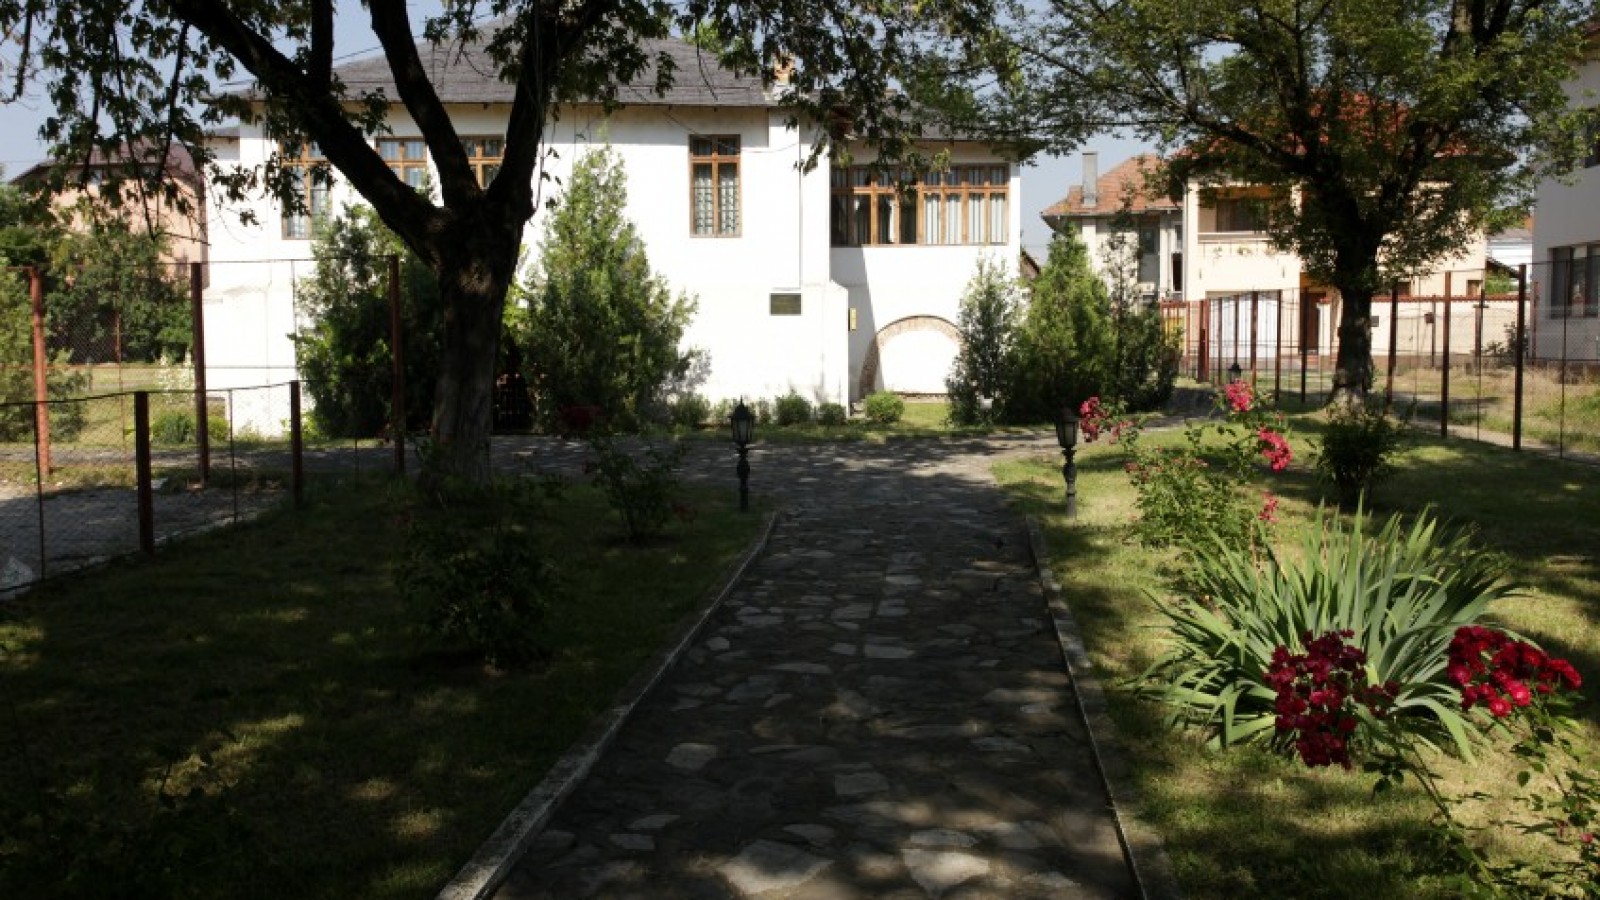 Muzeul Vasile Blendea